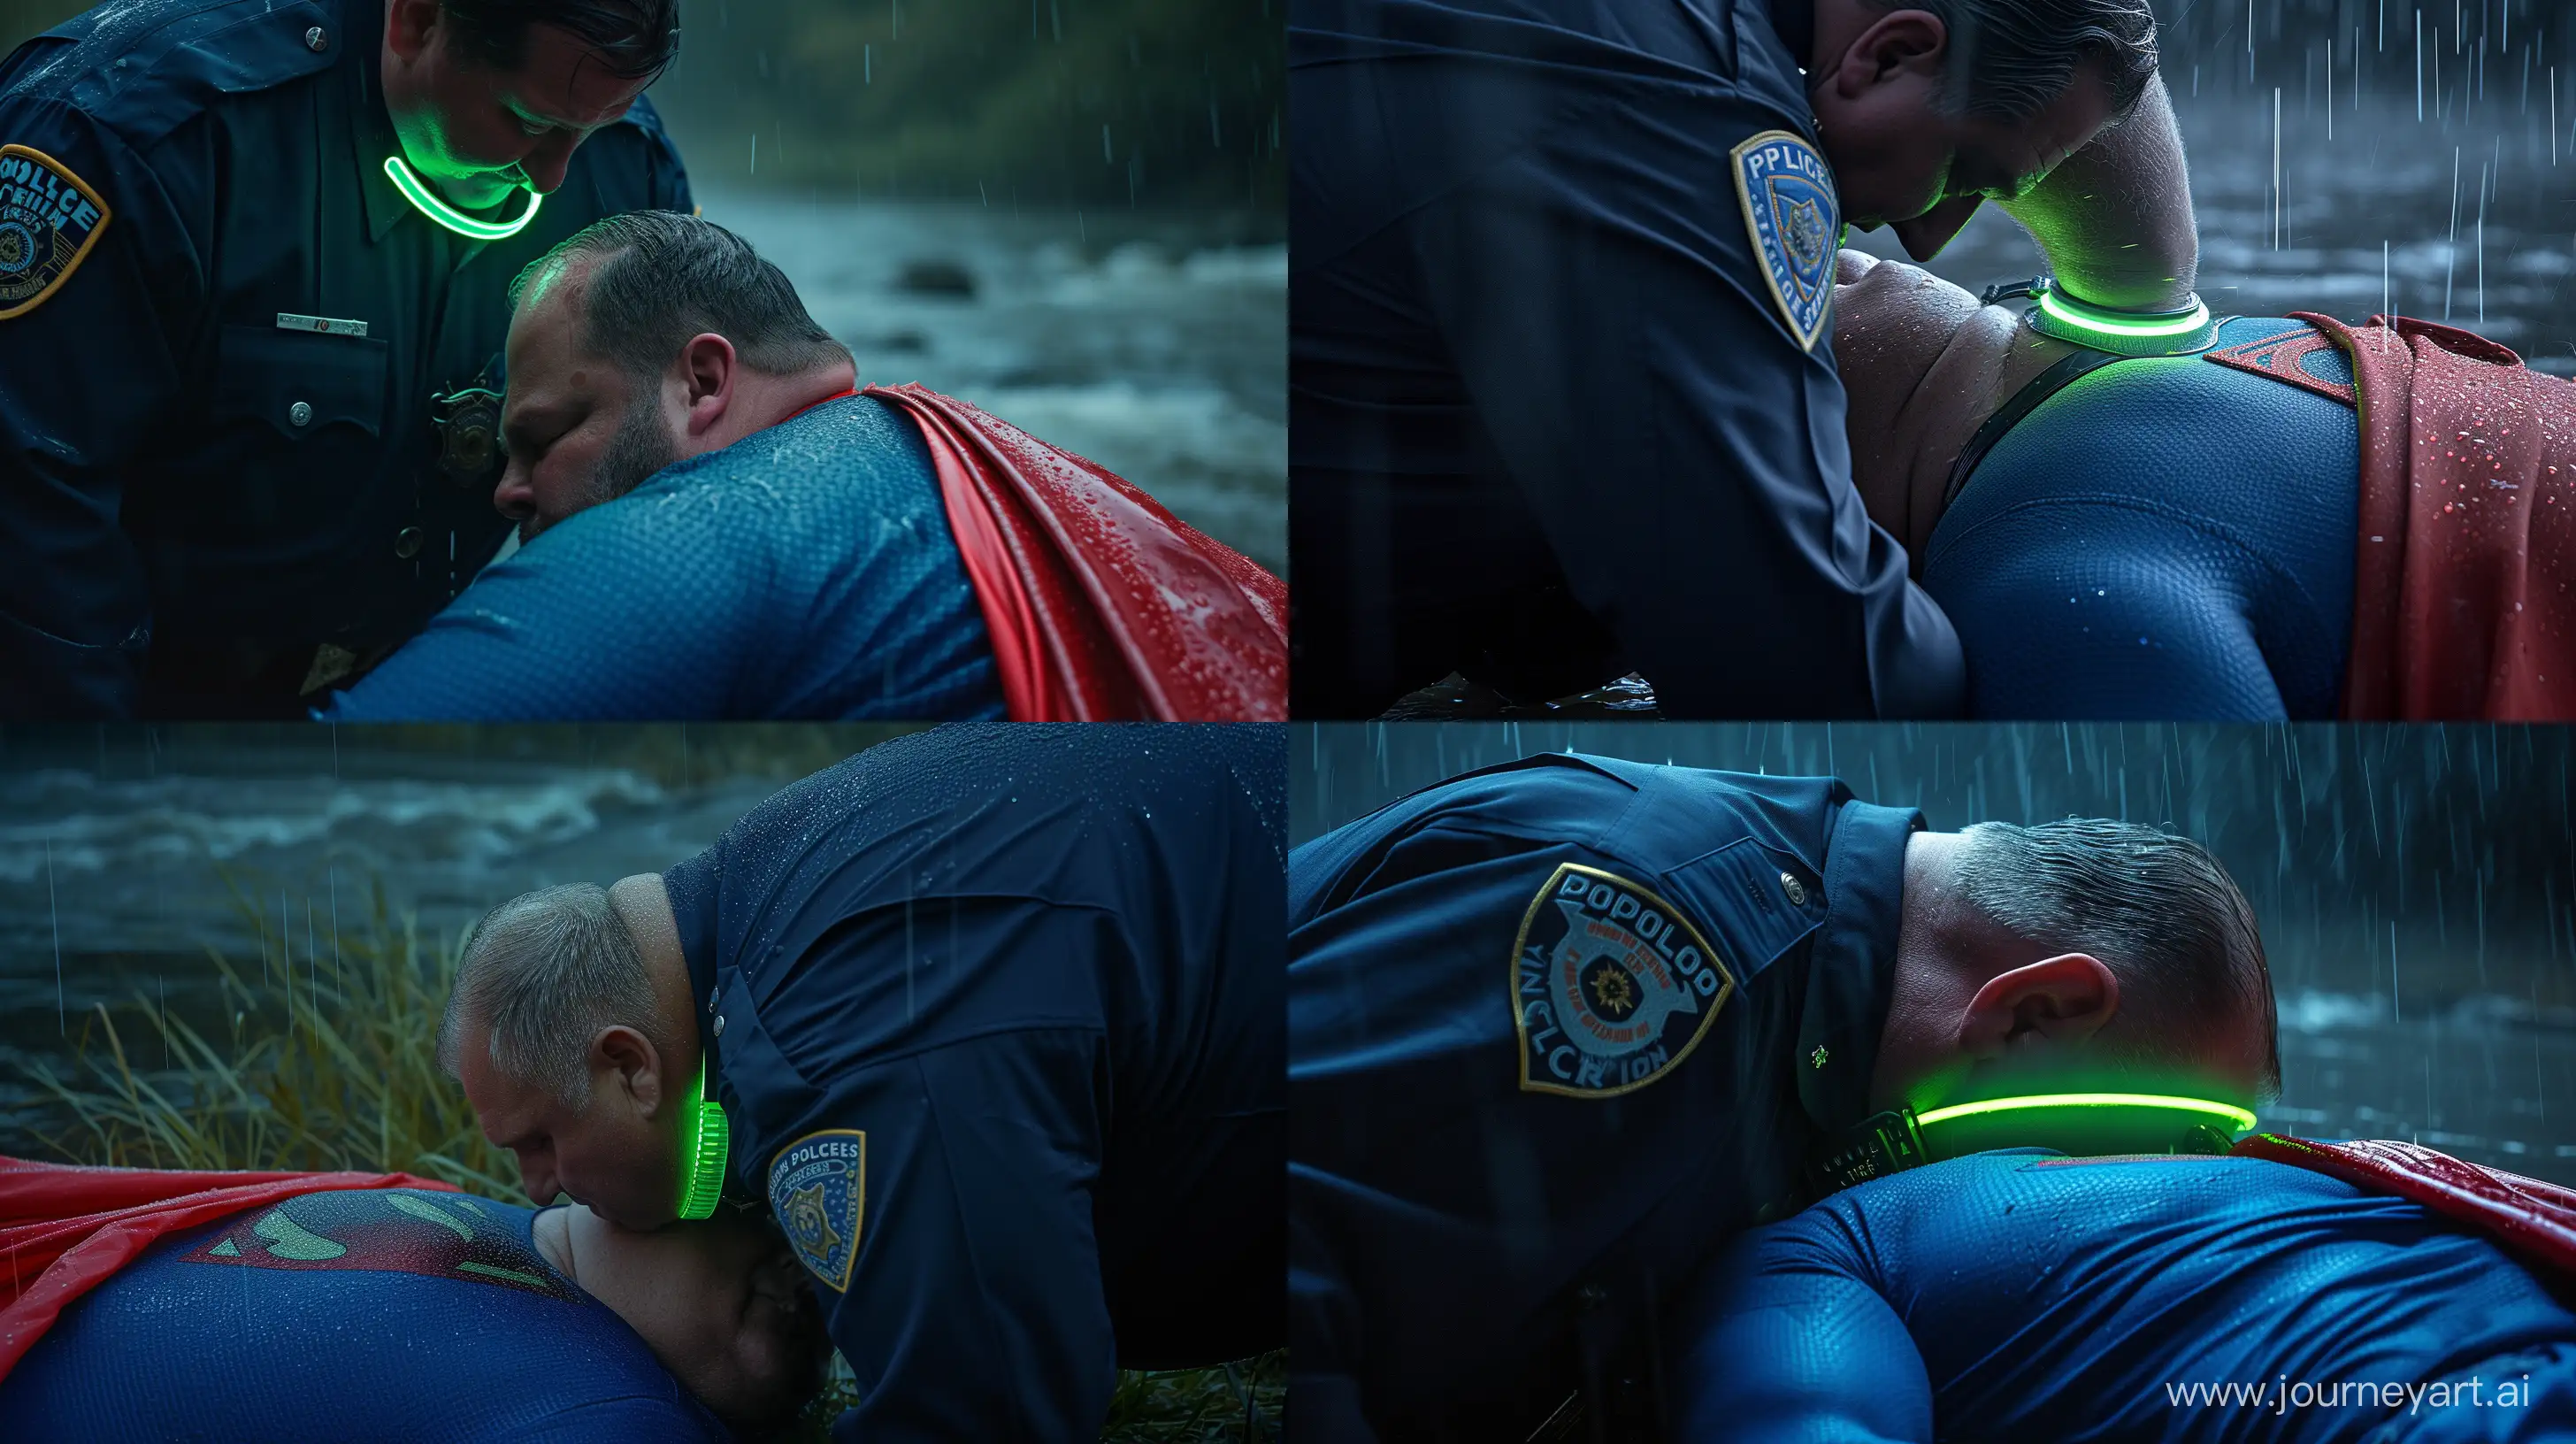 Elderly-Superman-Gets-Neon-Collar-in-Rainy-River-Scene